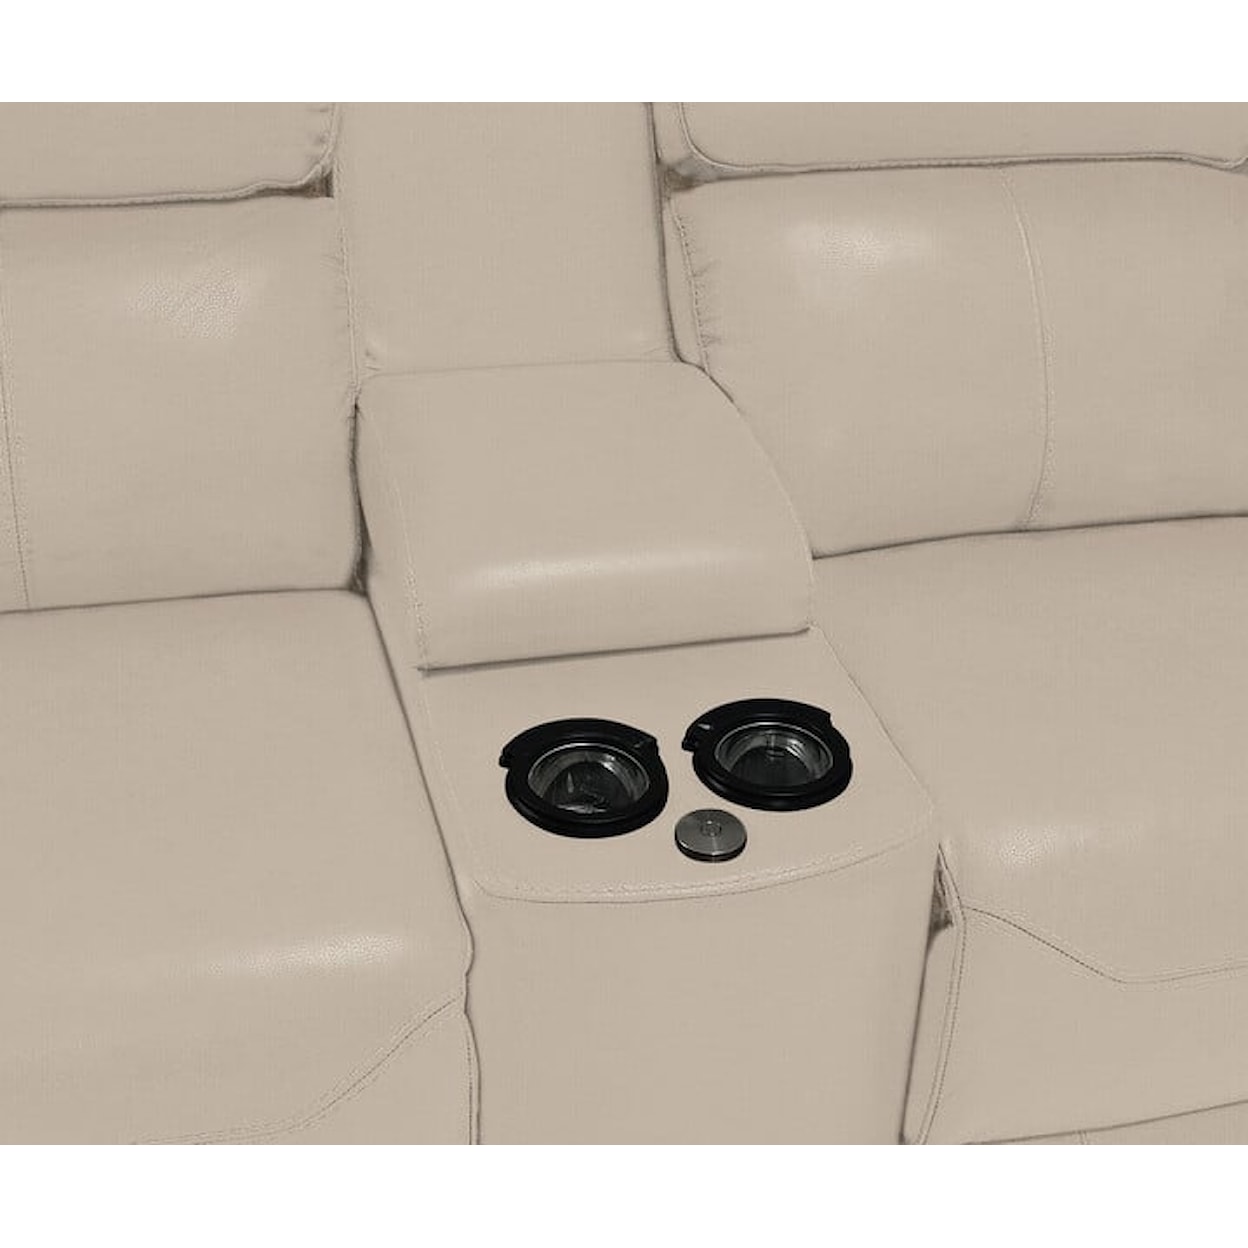 Palliser Granada Granada 4-Seat Reclining Sectional Sofa